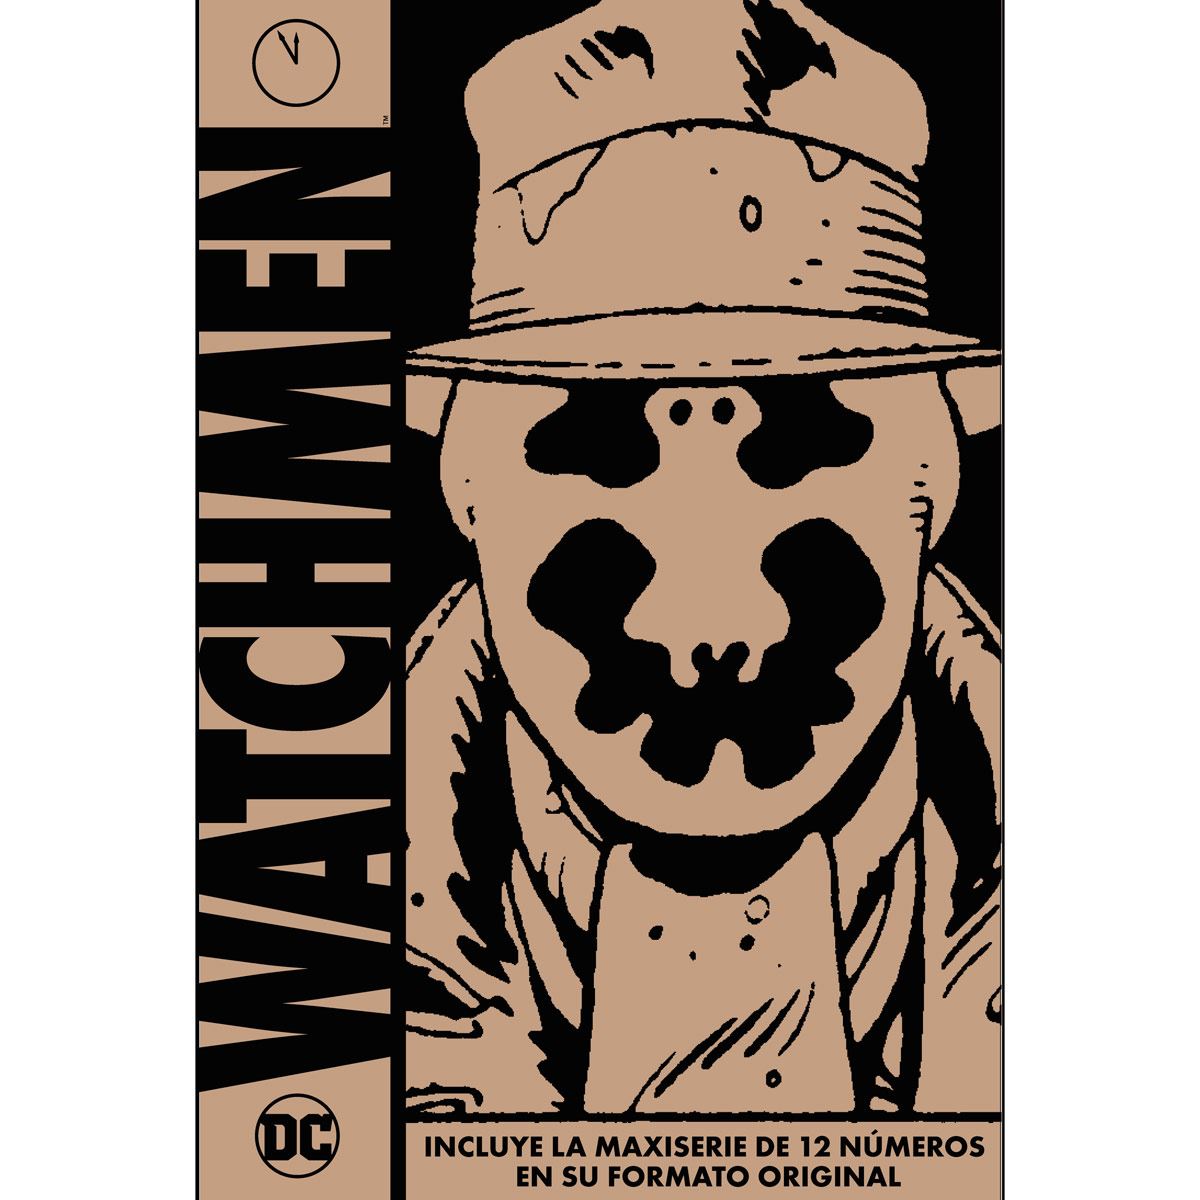 DC comics Watchmen